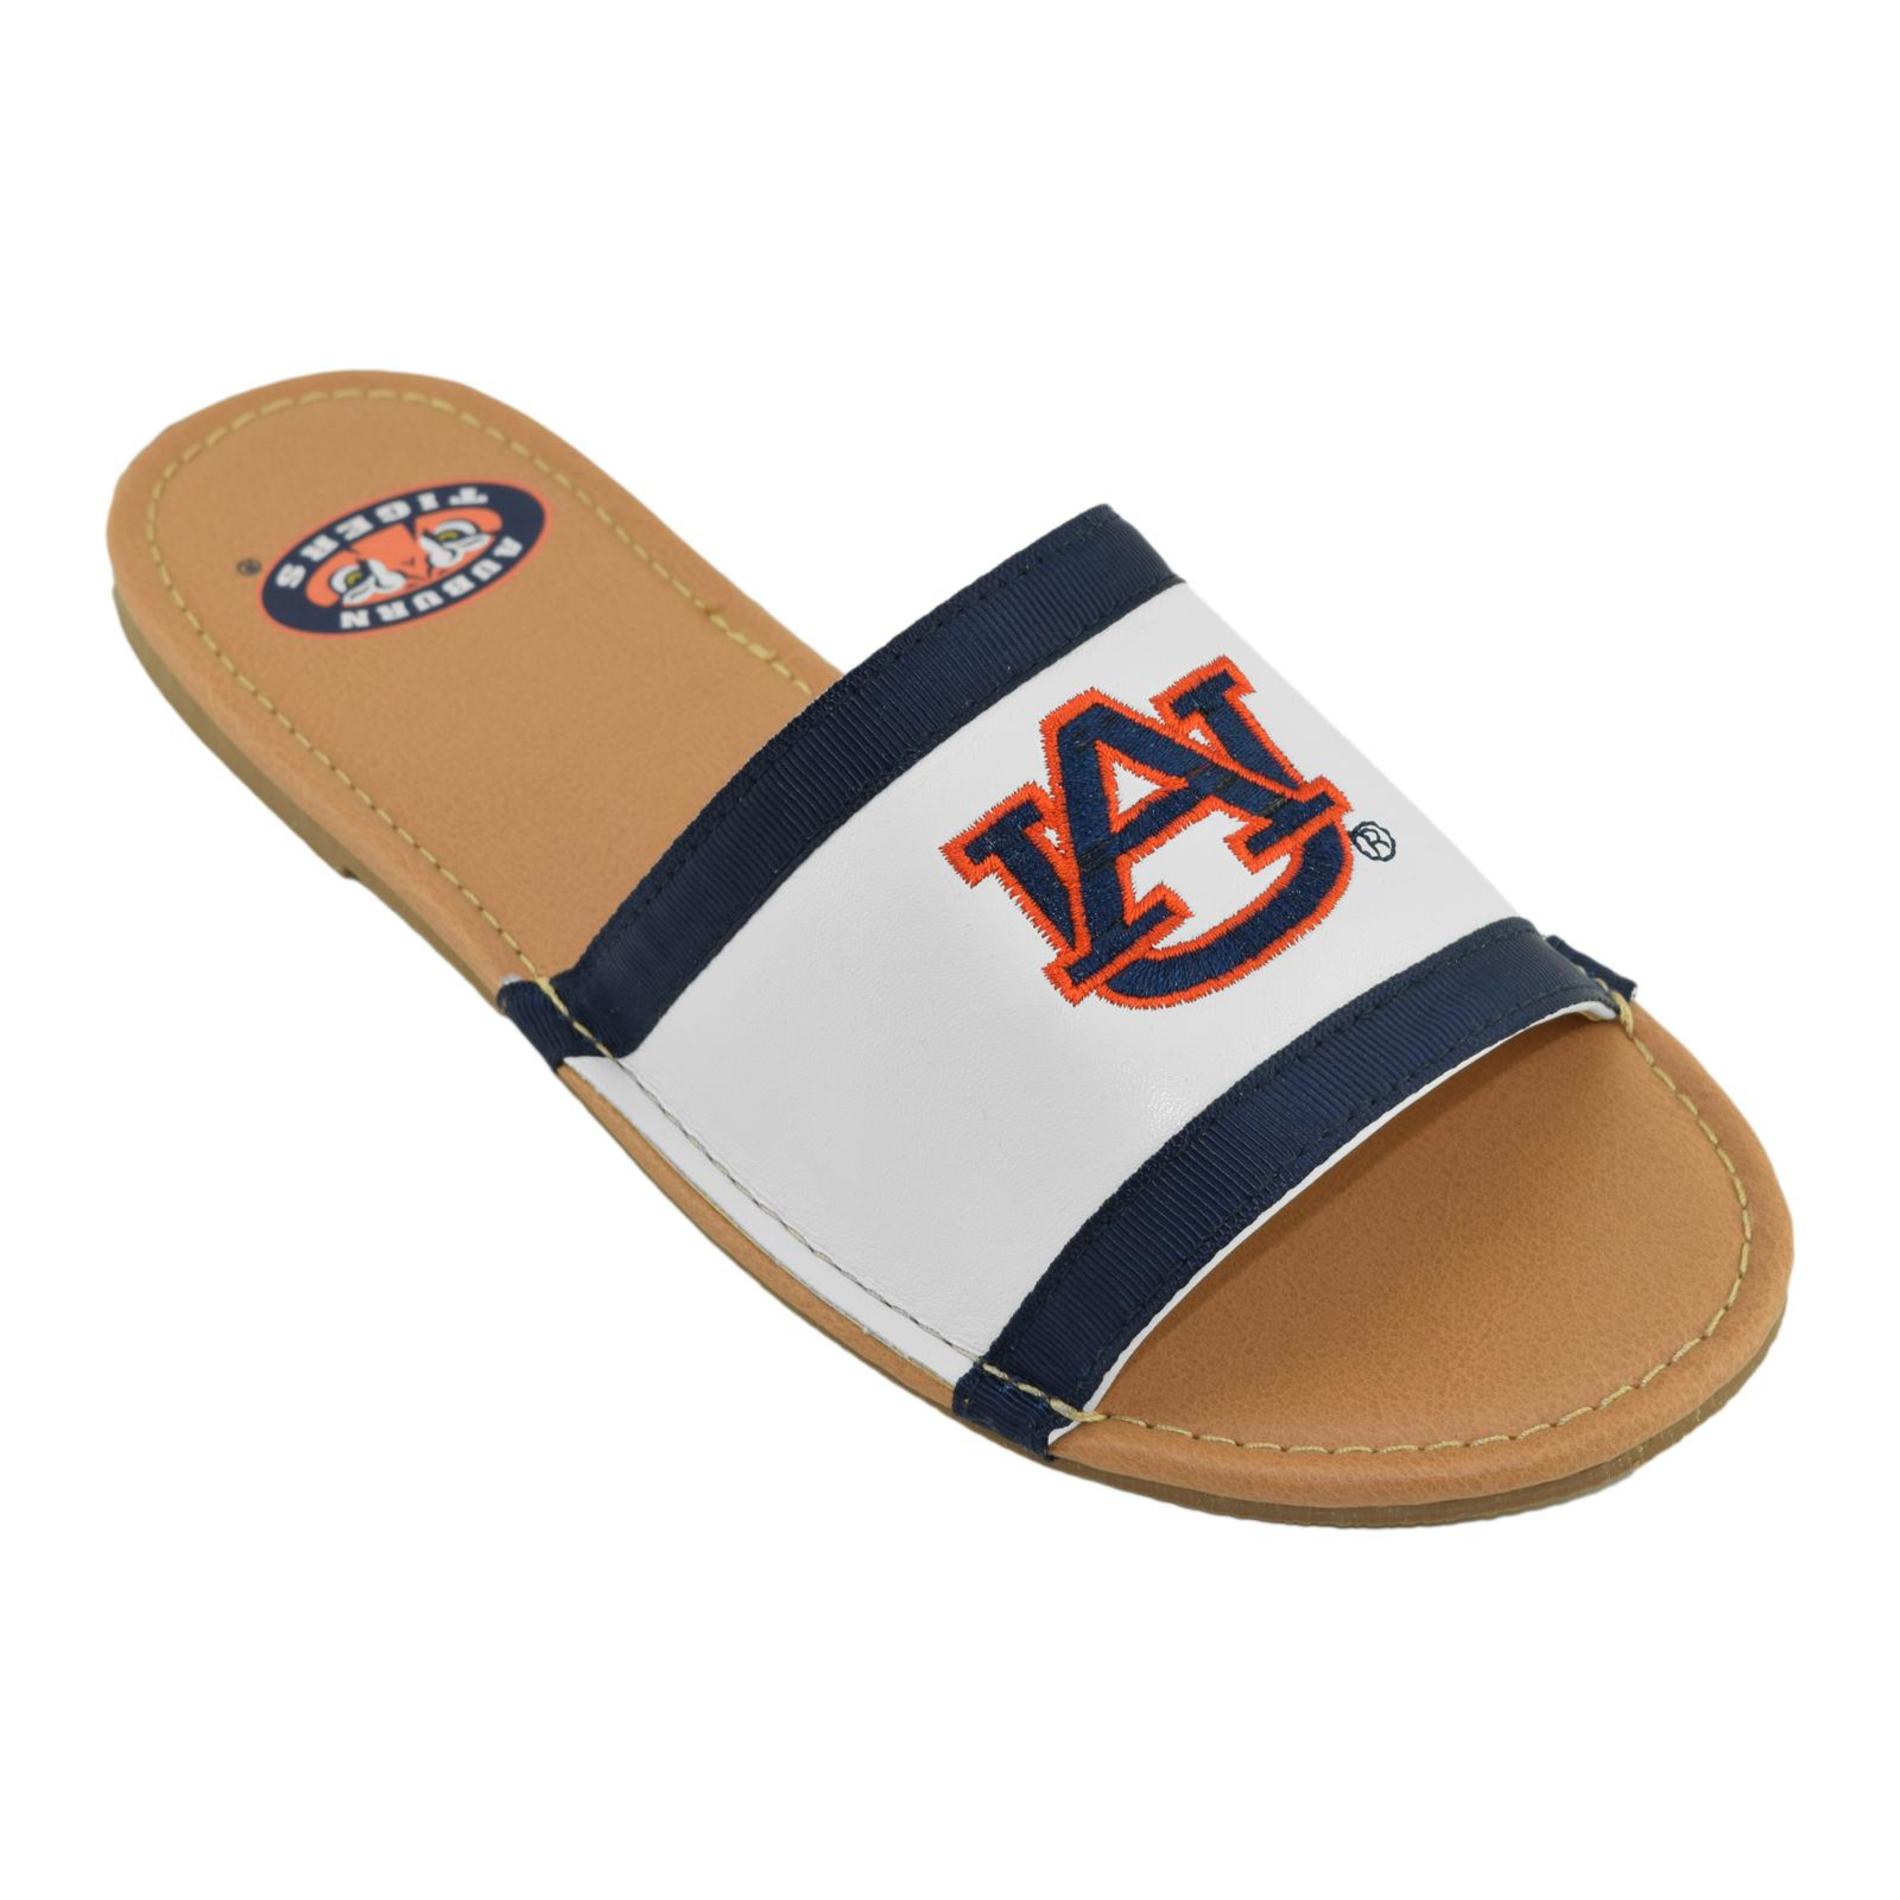 NCAA Women's Slide Sandal - Auburn University Tigers